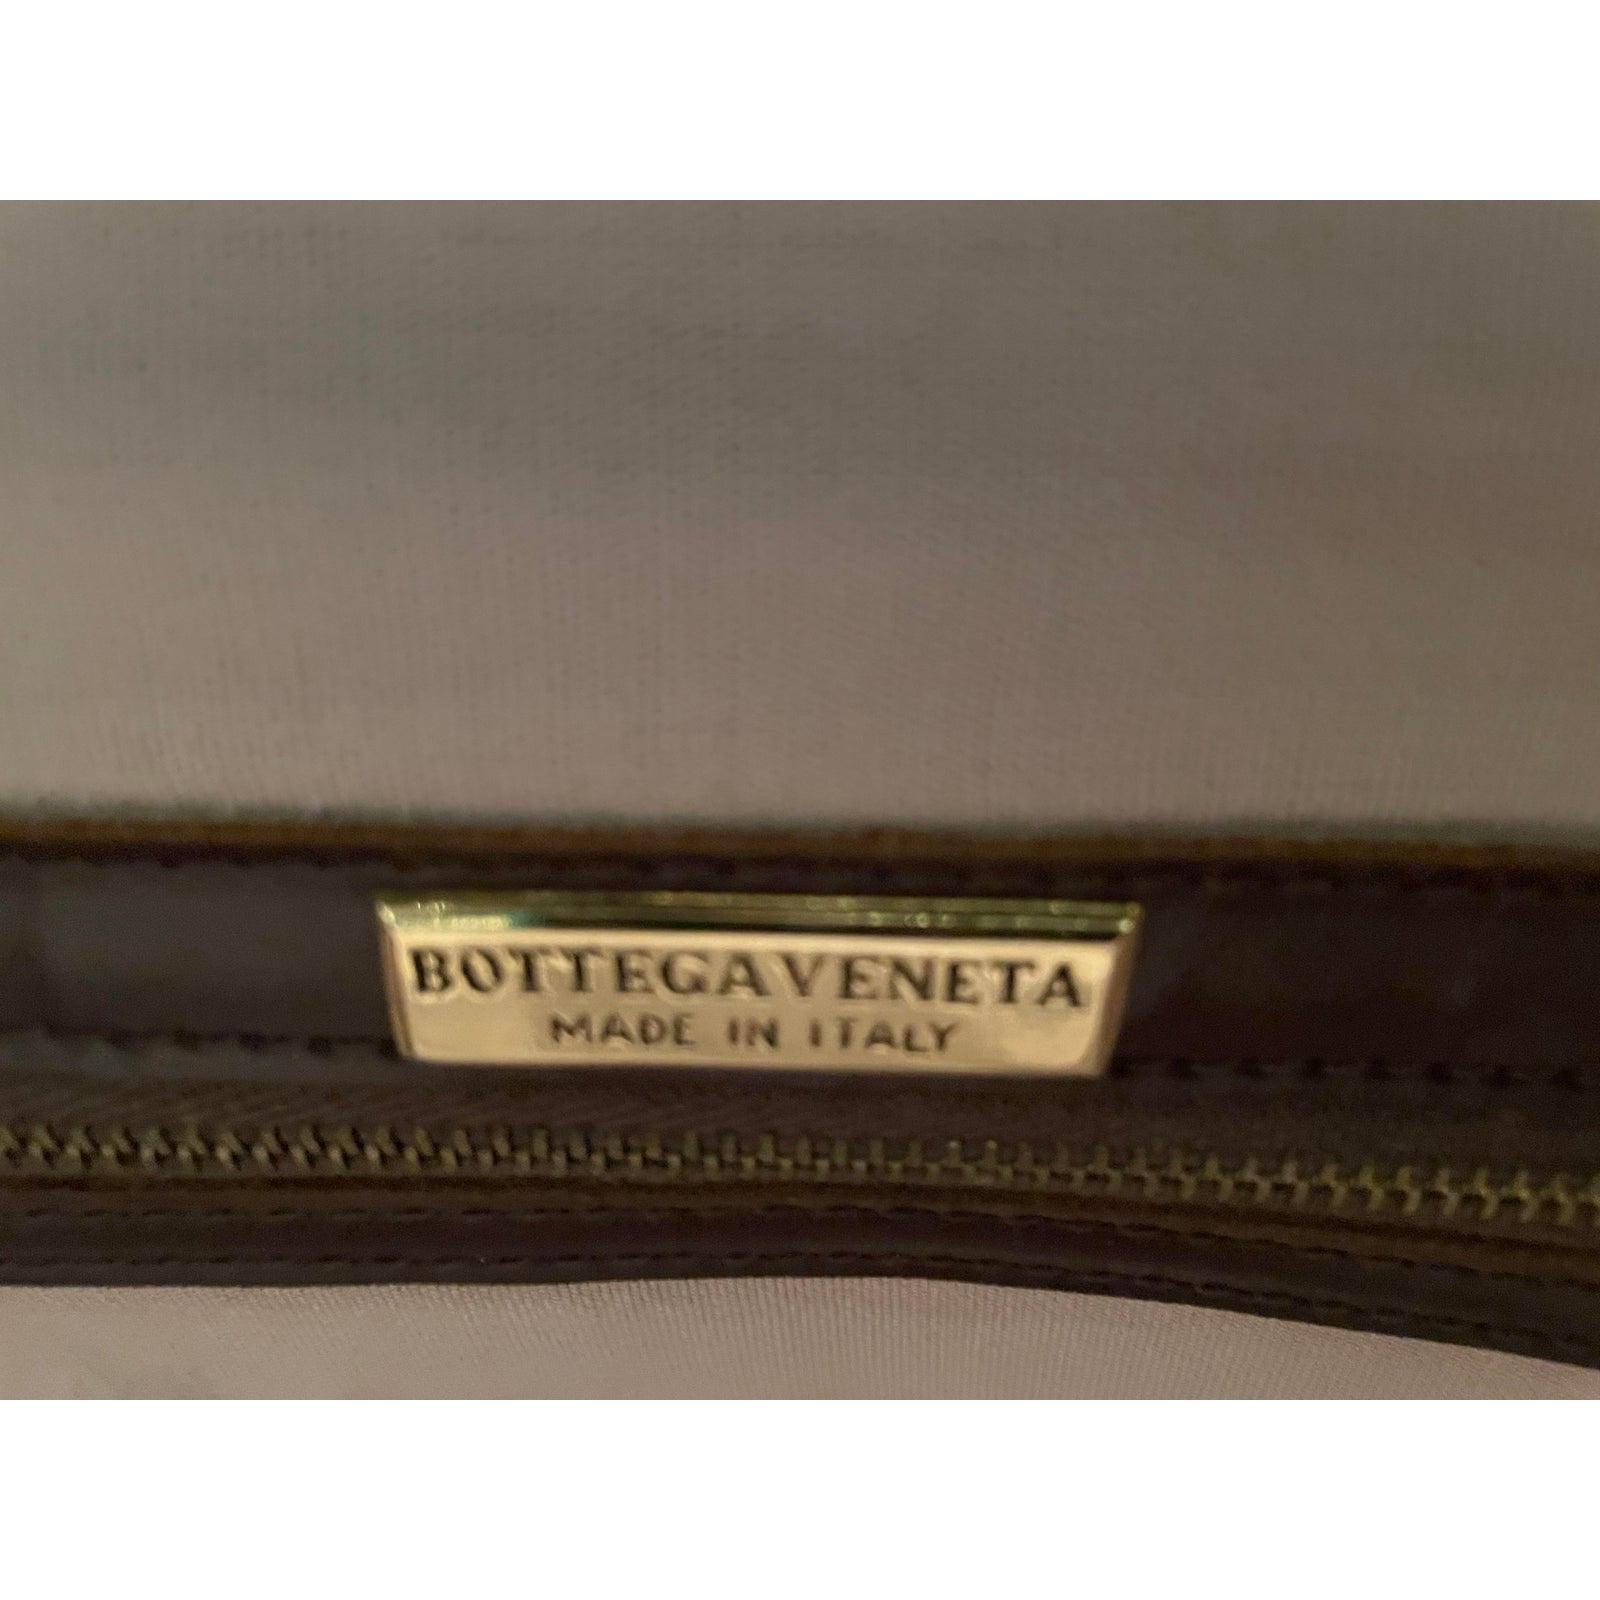 Vintage Houndstooth and Leather Bottega Veneta Weekend Bag 1